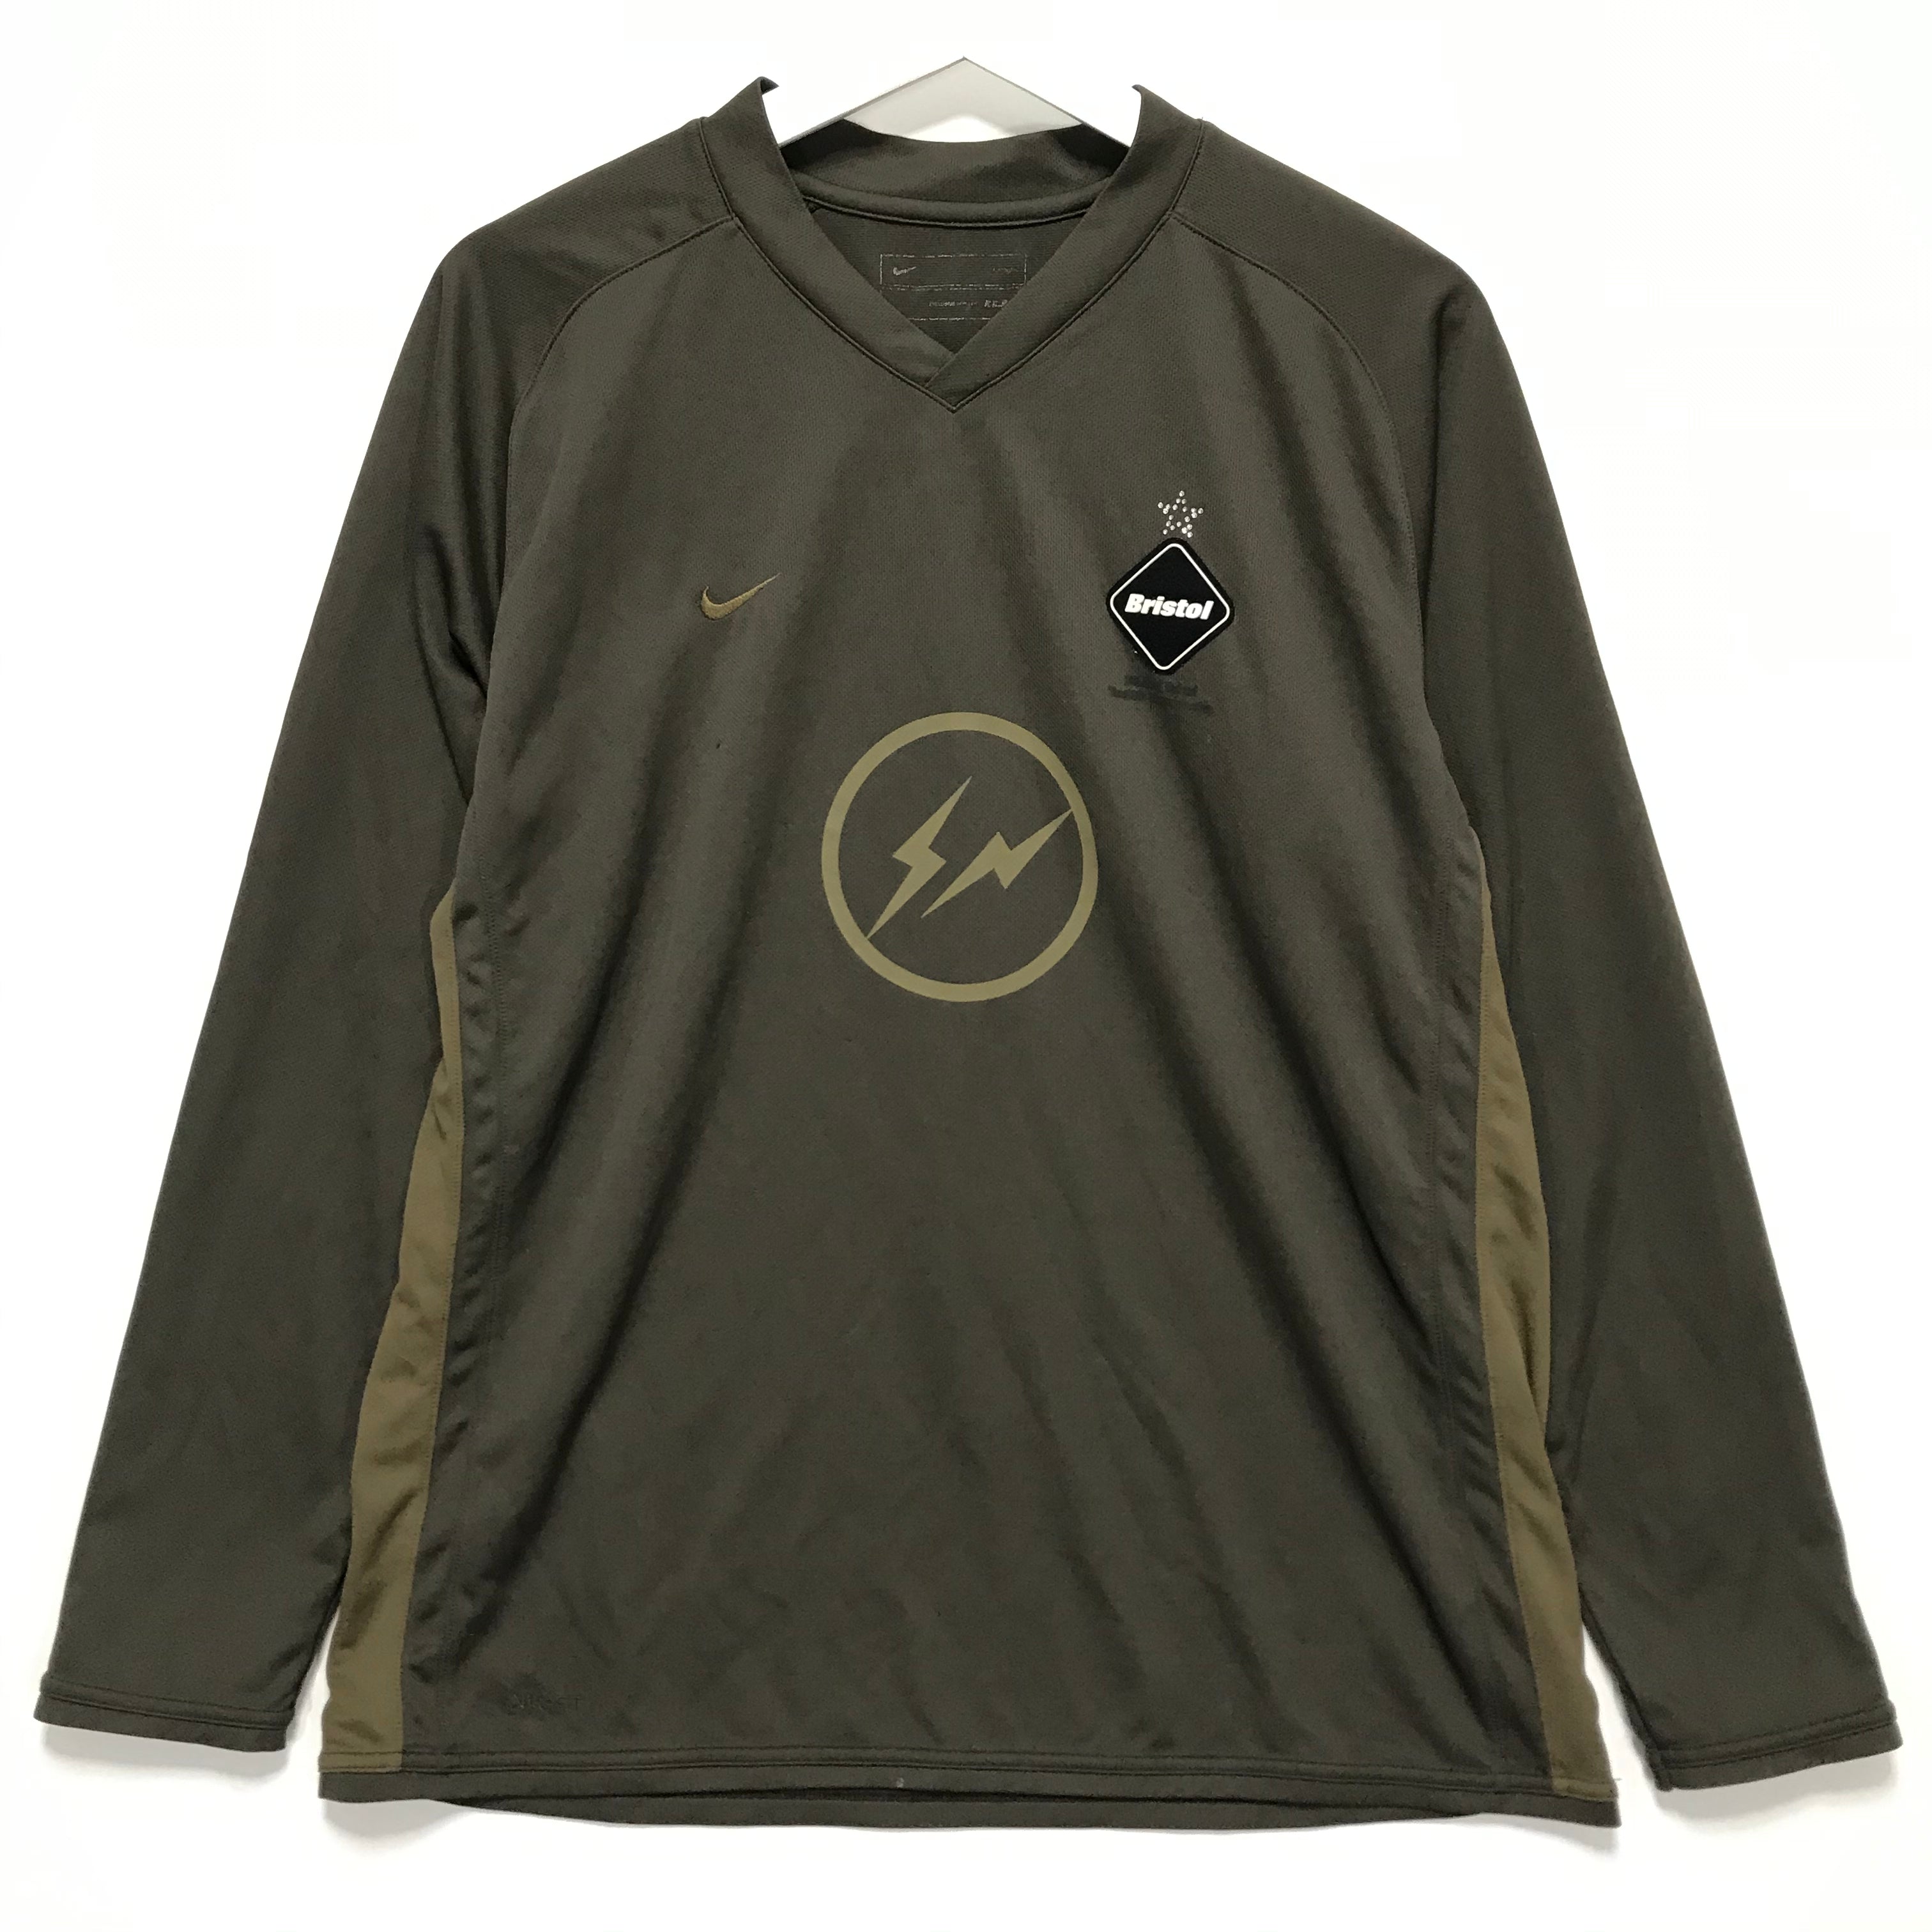 [M] Fragment x Visvim x FCRB Nike Soccer Football L/S Jersey Shirt